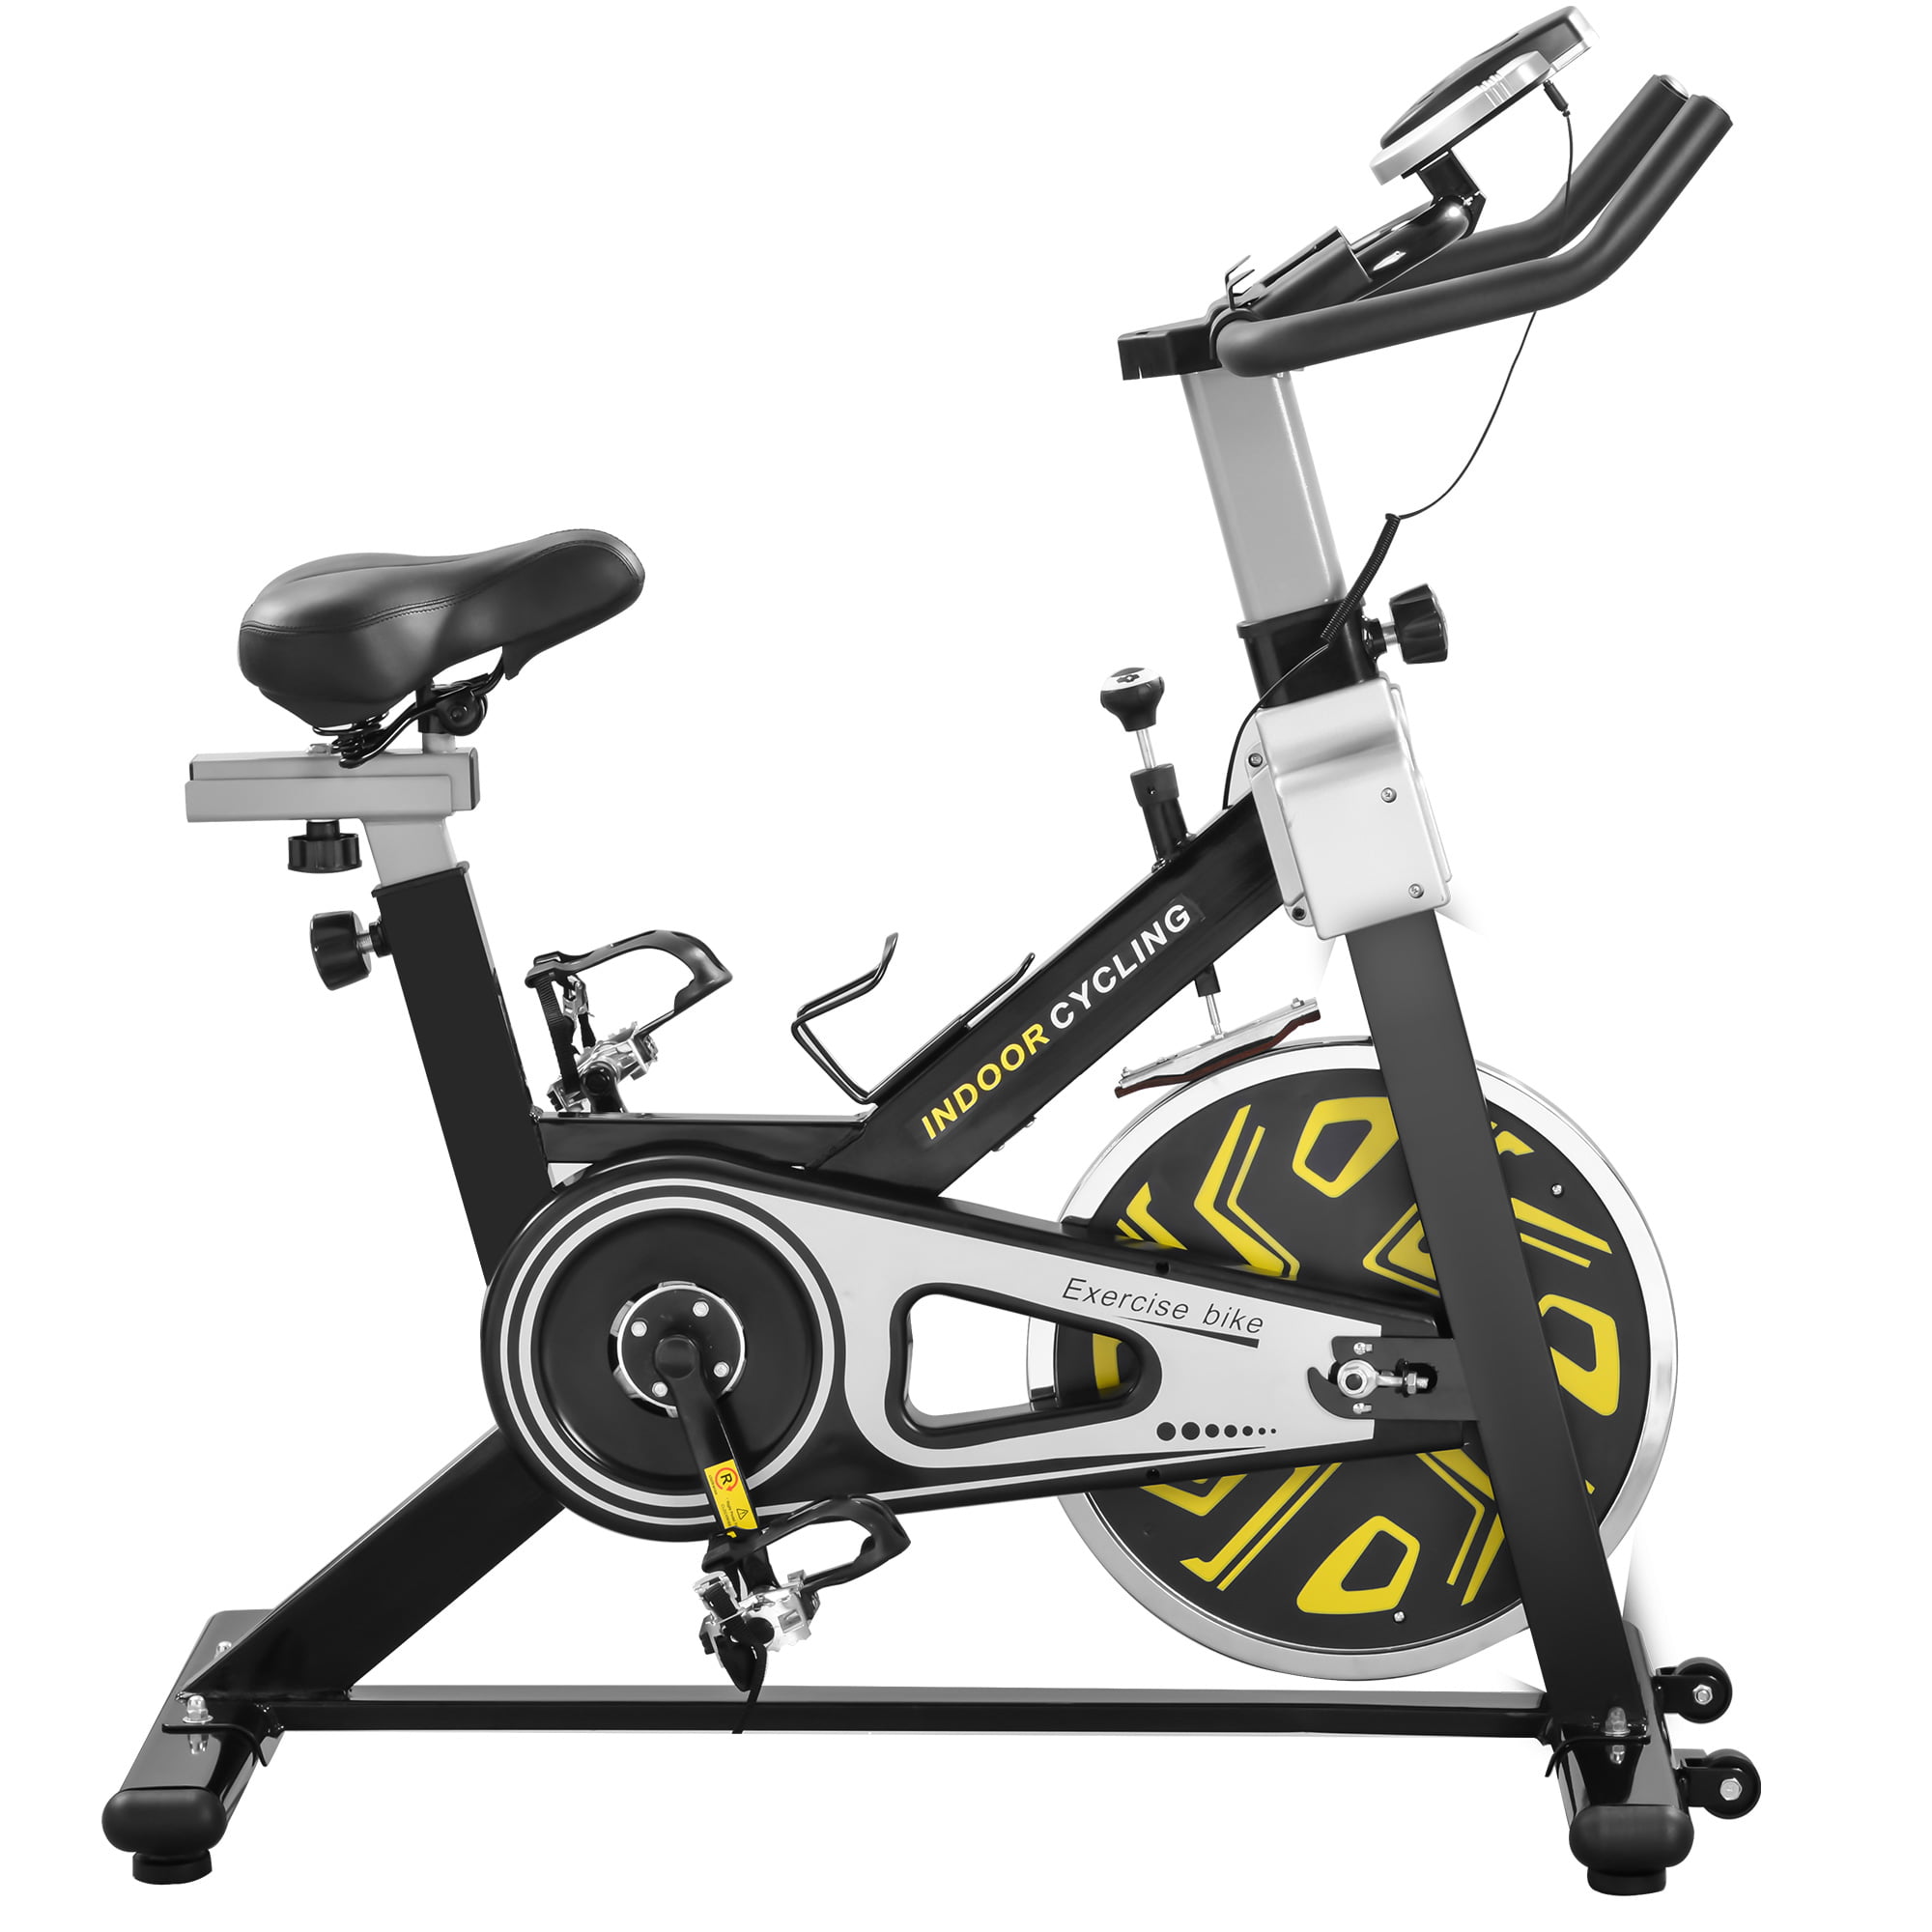 Indoor Exercise Spin Bike Home Gym Bicycle Training Adjustable Seat & Handlebar 